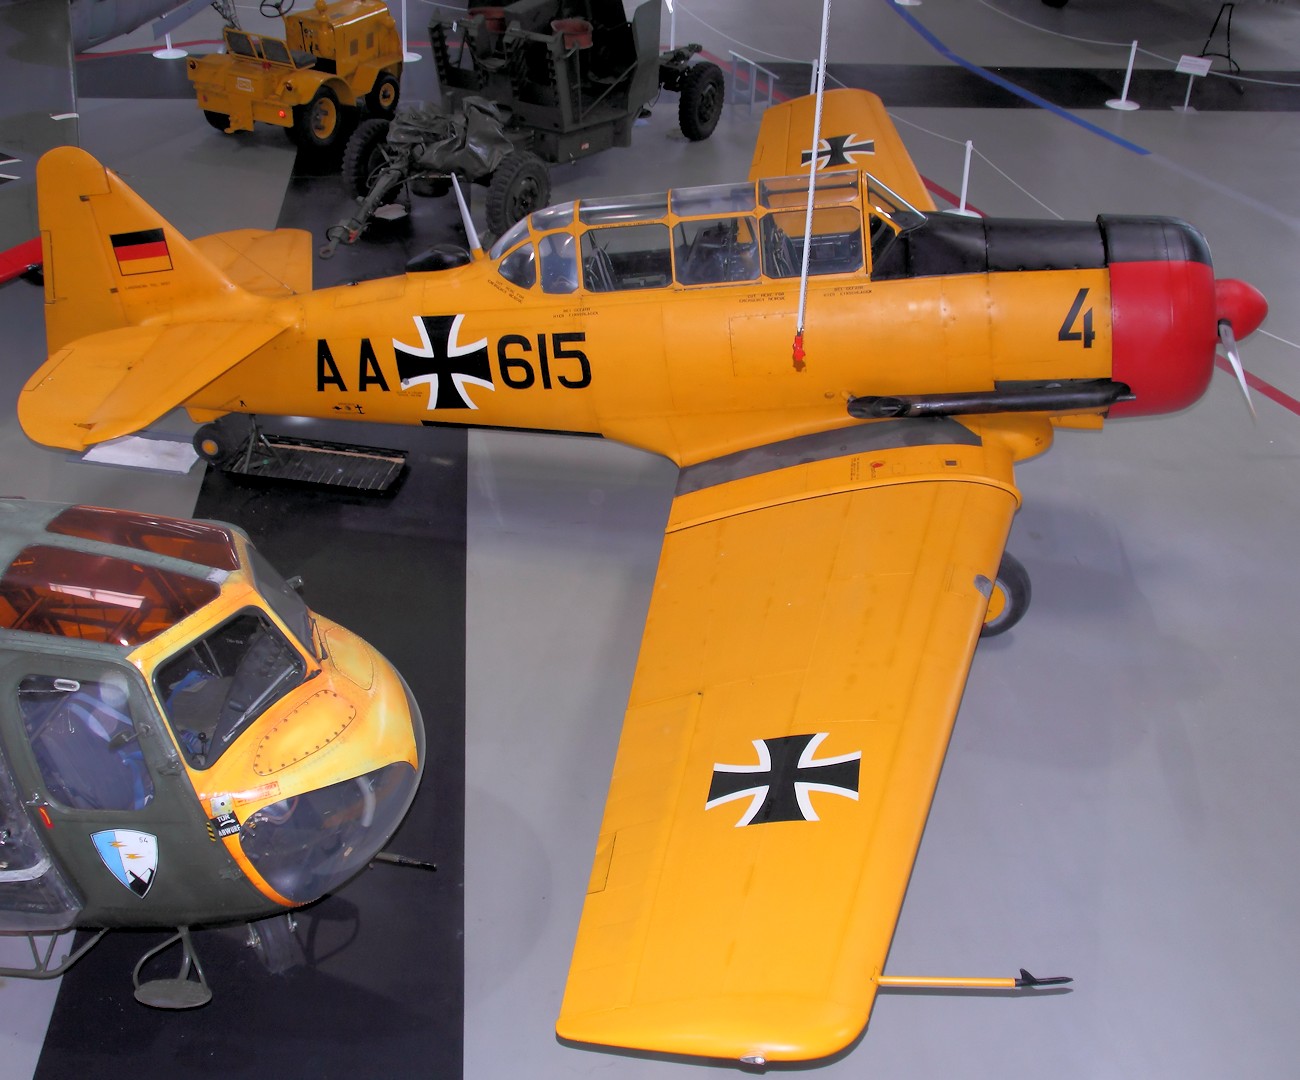 North American CCF Harvard - Ausbildungsflugzeug